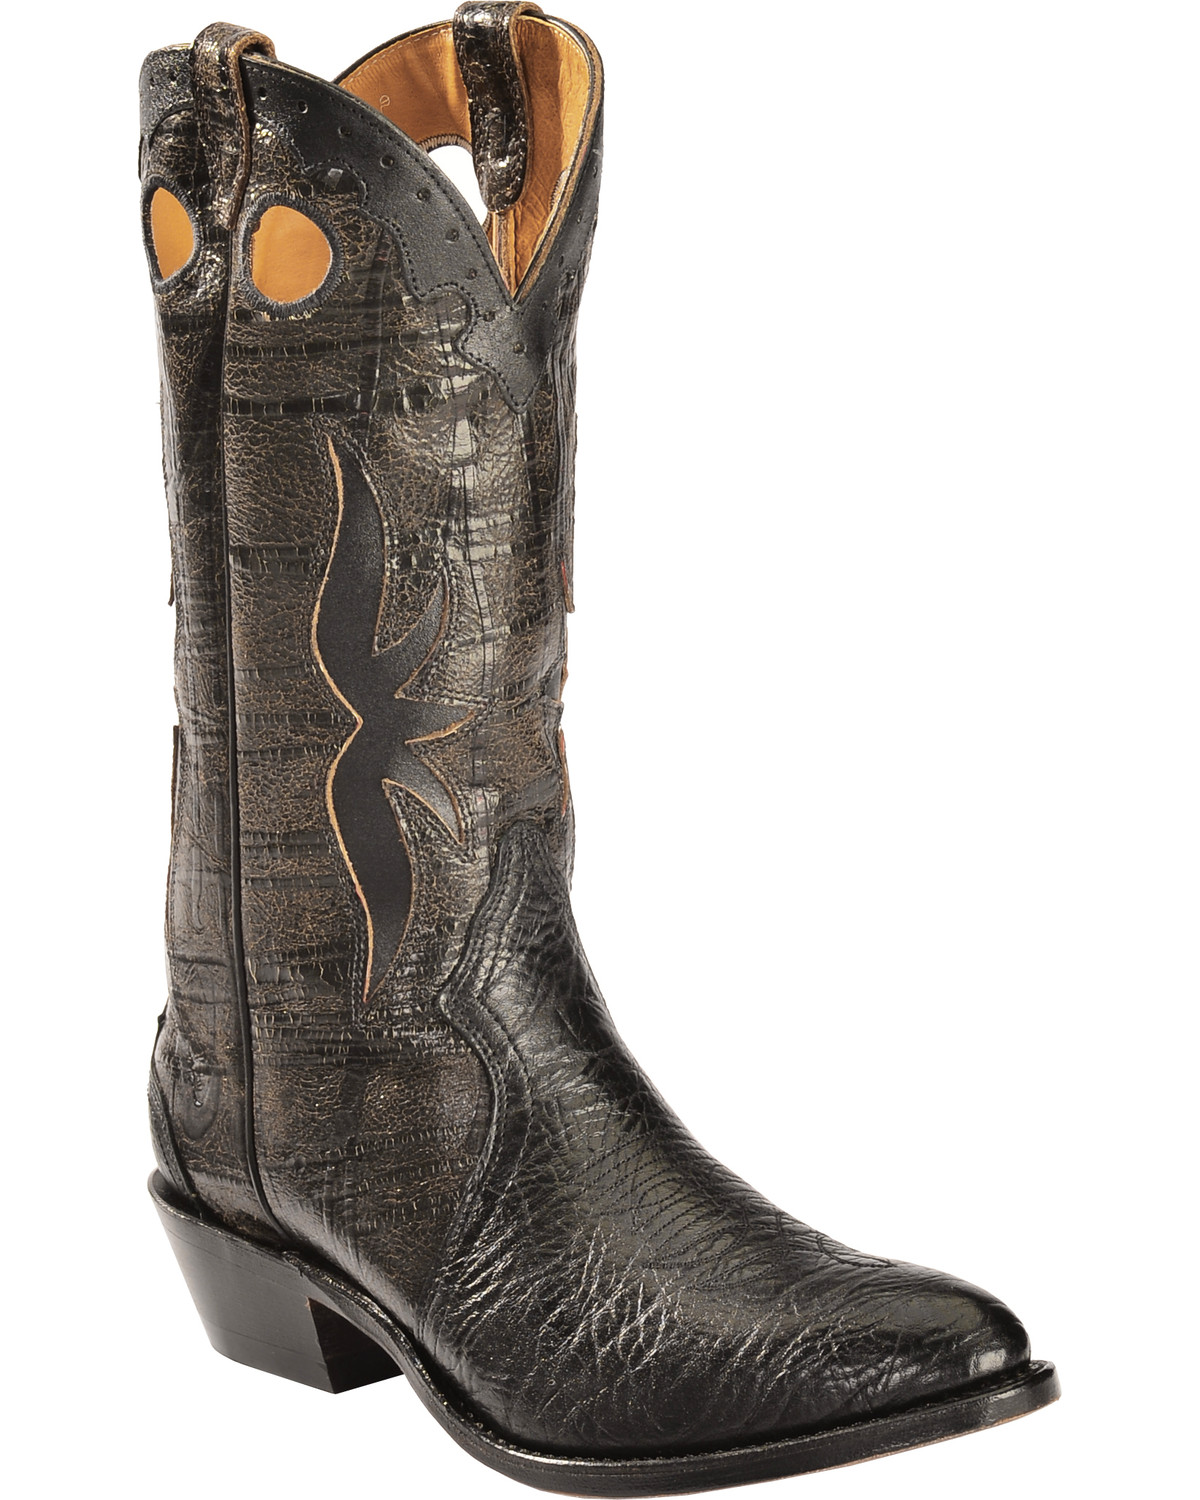 Boulet Men's Shoulder Western Boots - Medium Toe